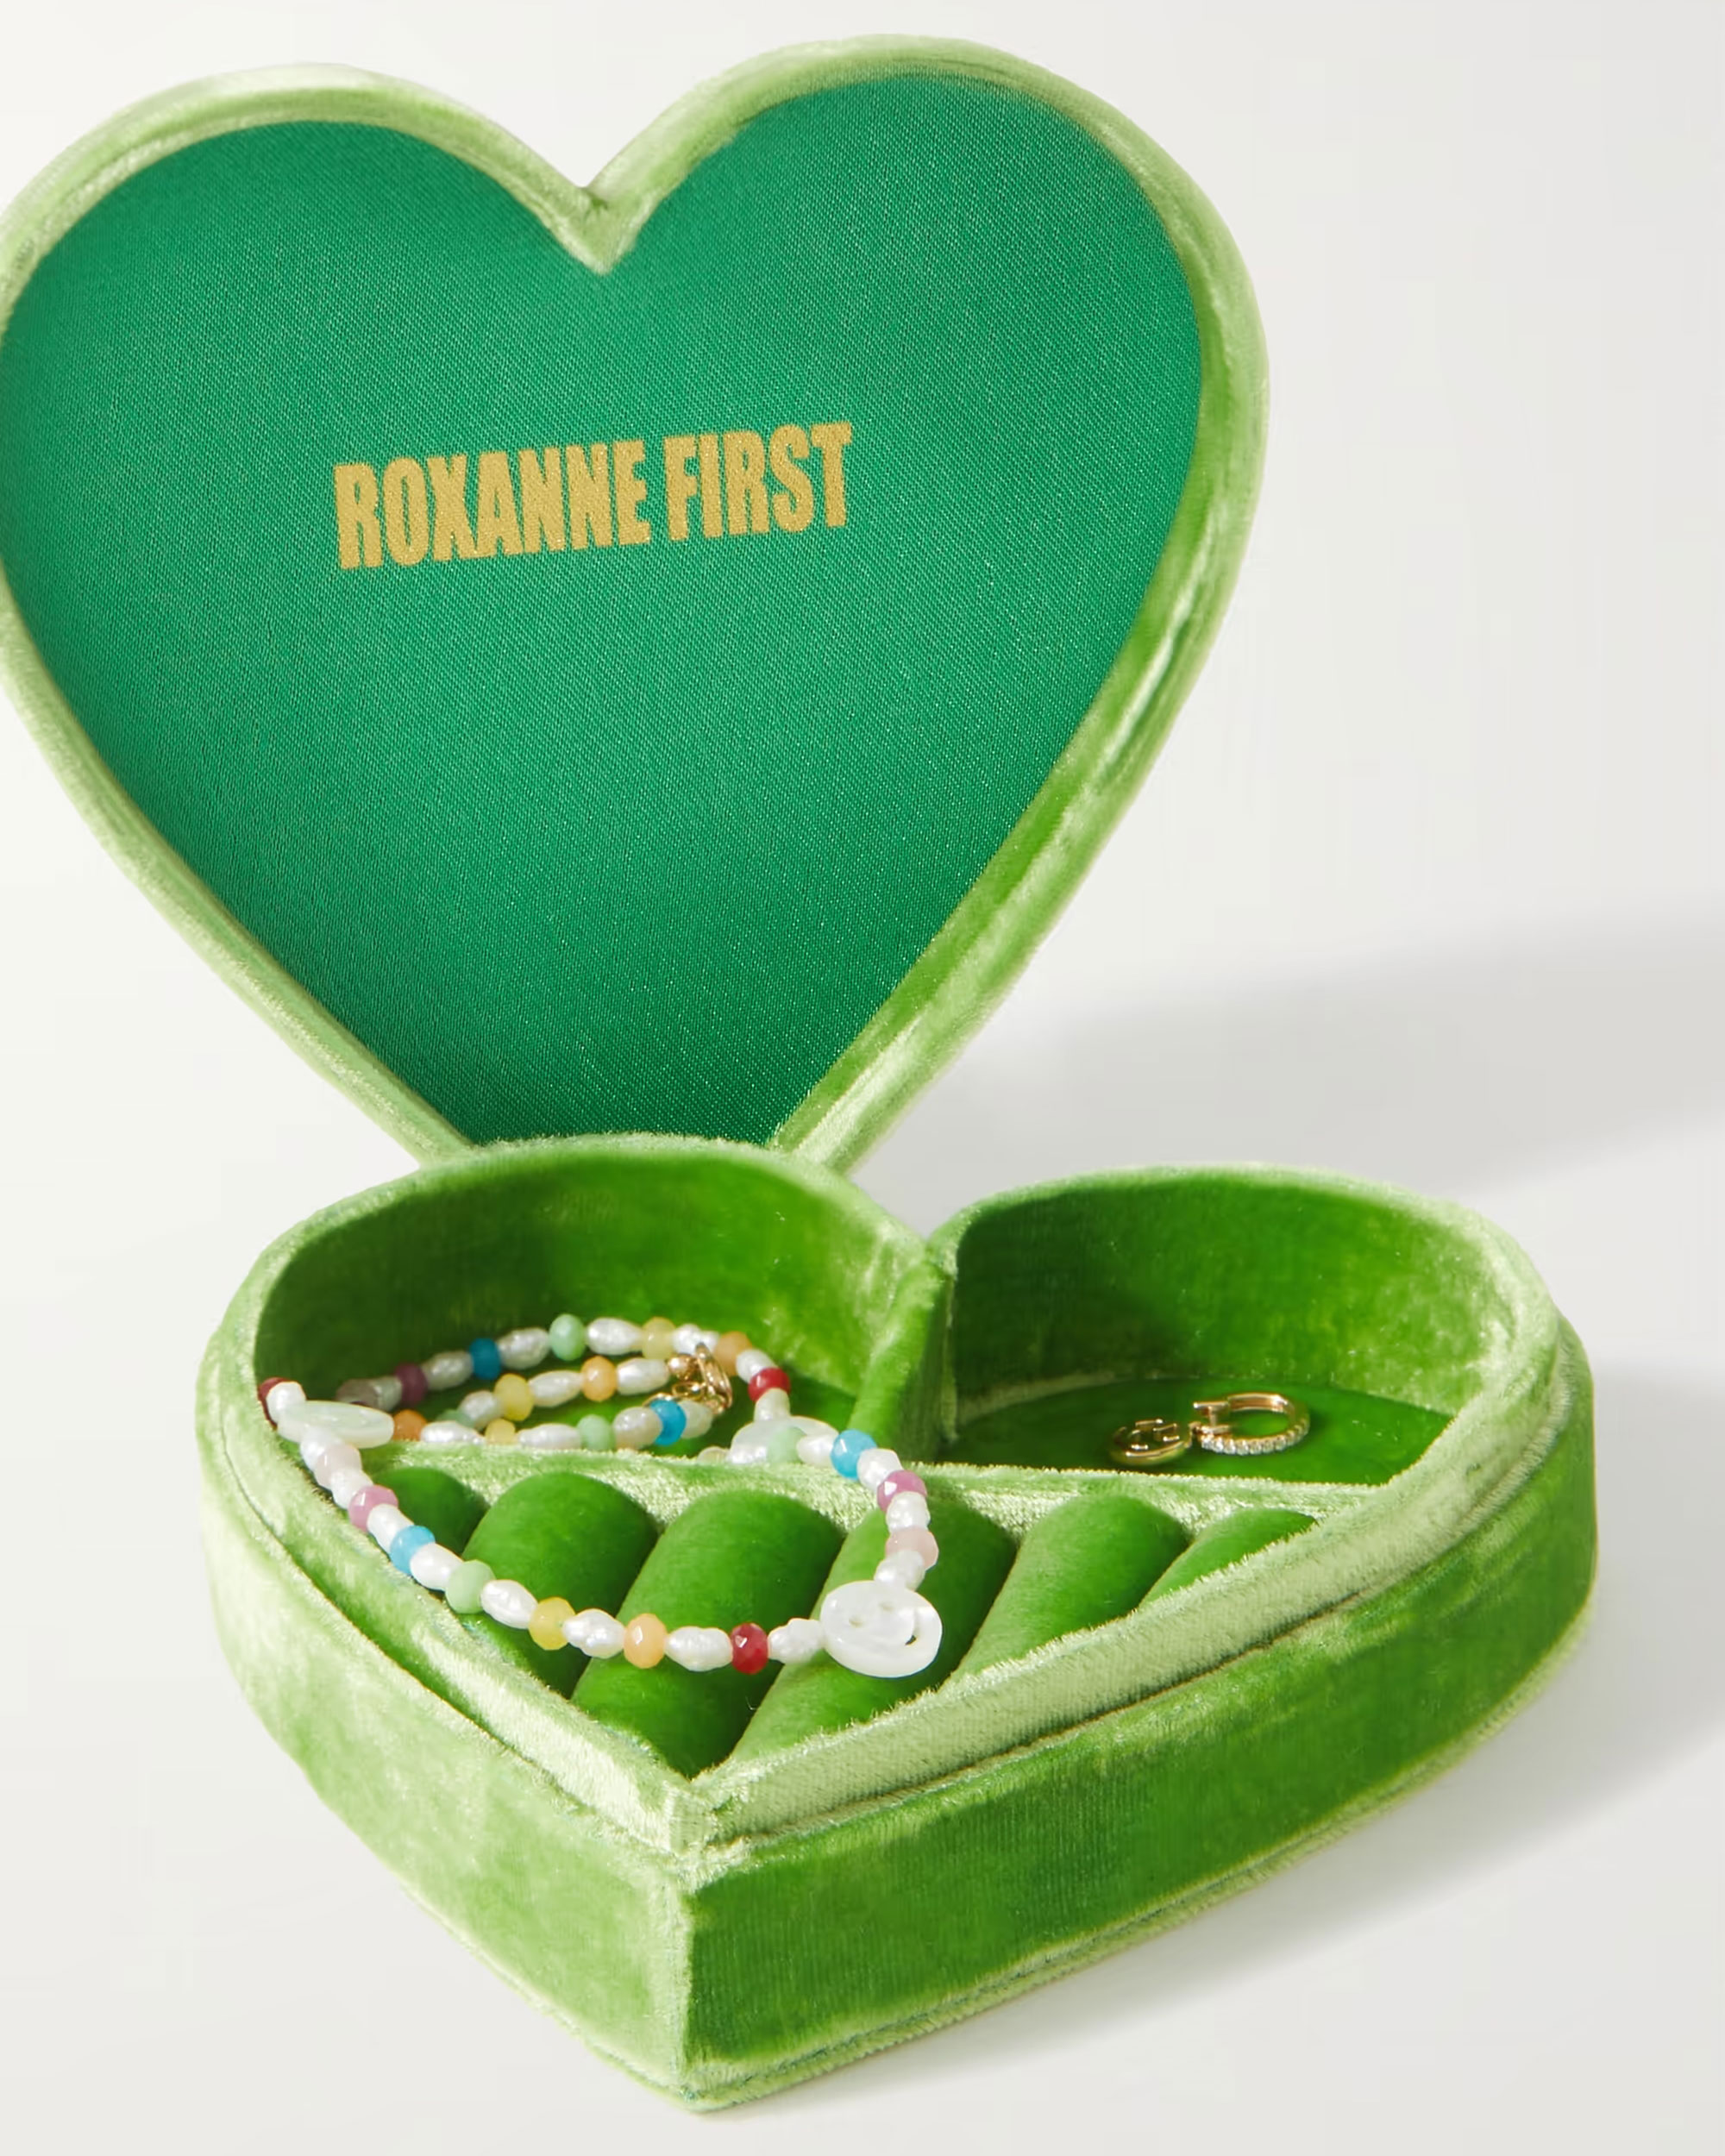 Roxanne First green velvet jewellery box, an affordable luxury gift